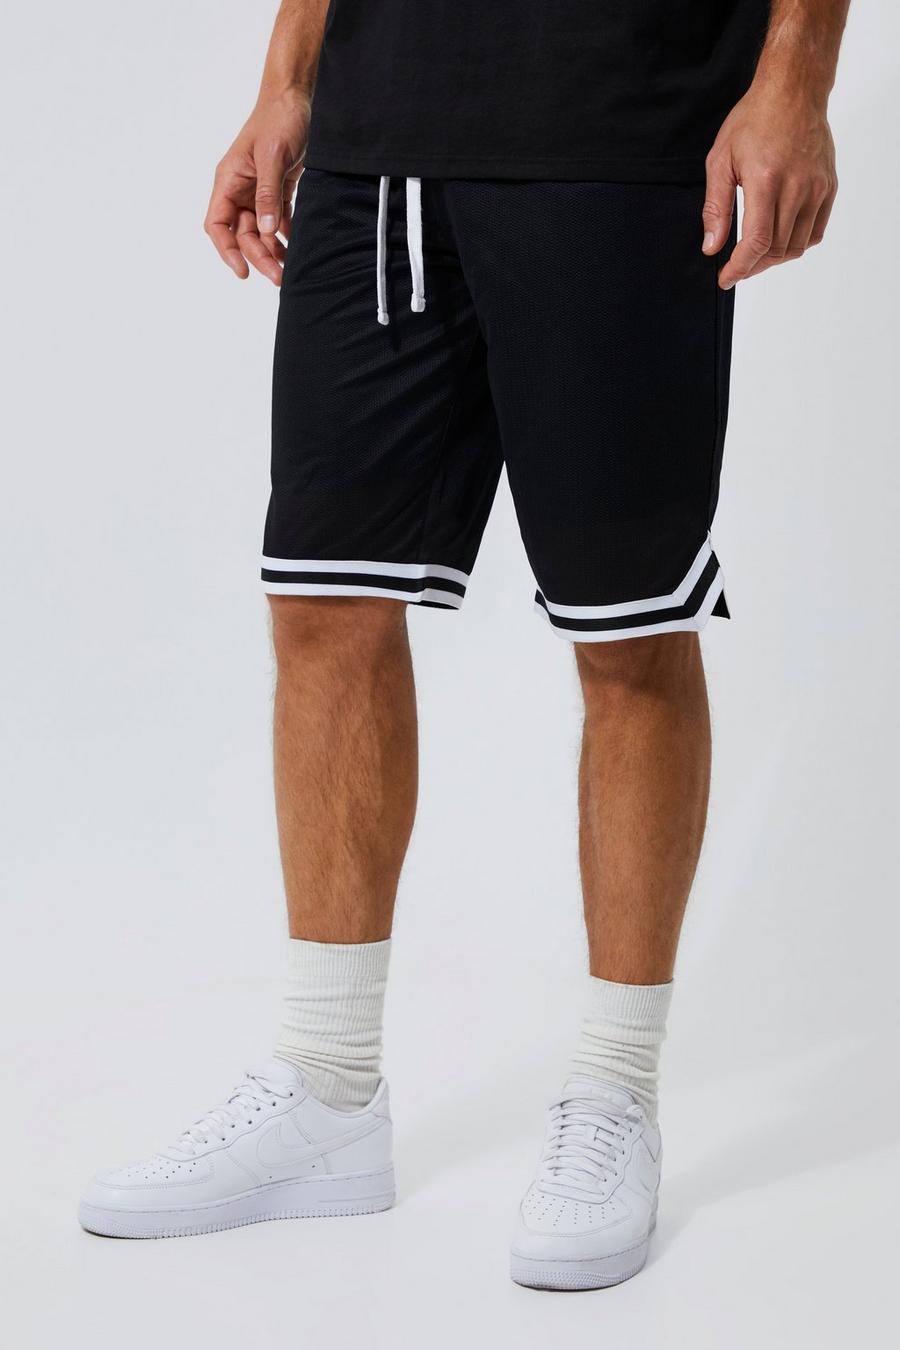 Pantalones cortos Tall de malla estilo baloncesto con cinta |